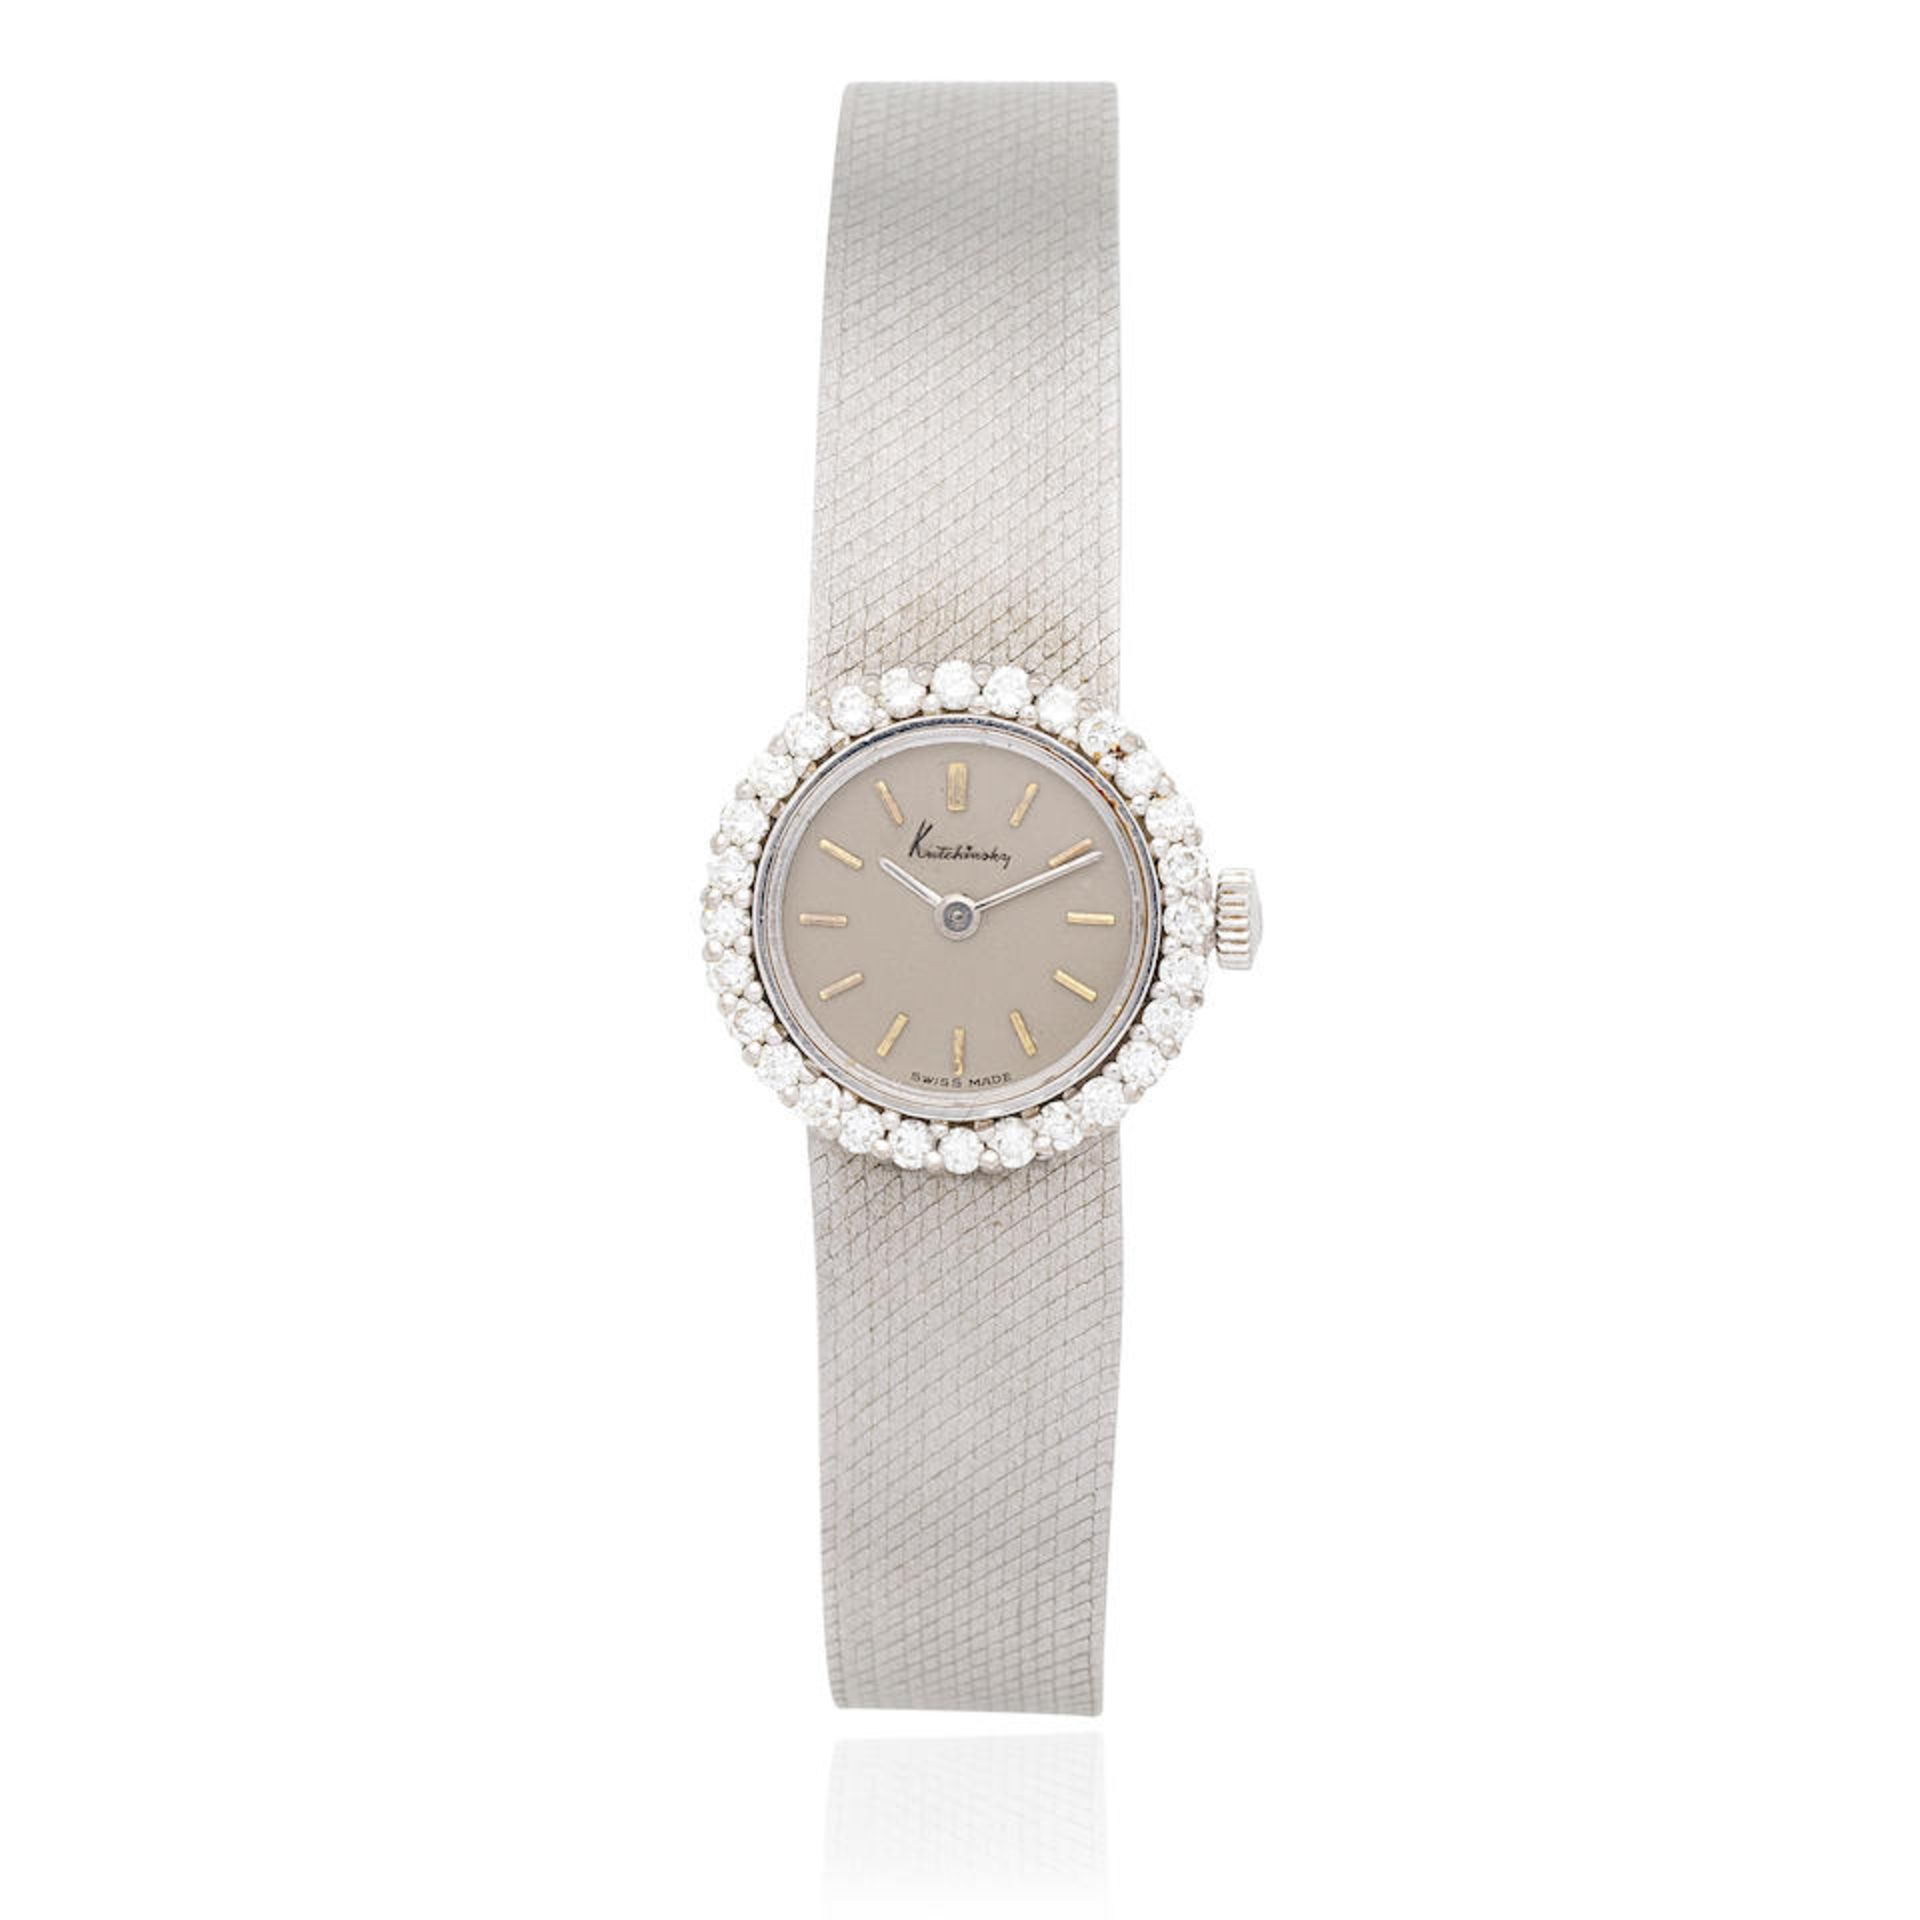 Chopard for Kutchinsky. An 18K white gold diamond set manual wind bracelet watch Circa 1970